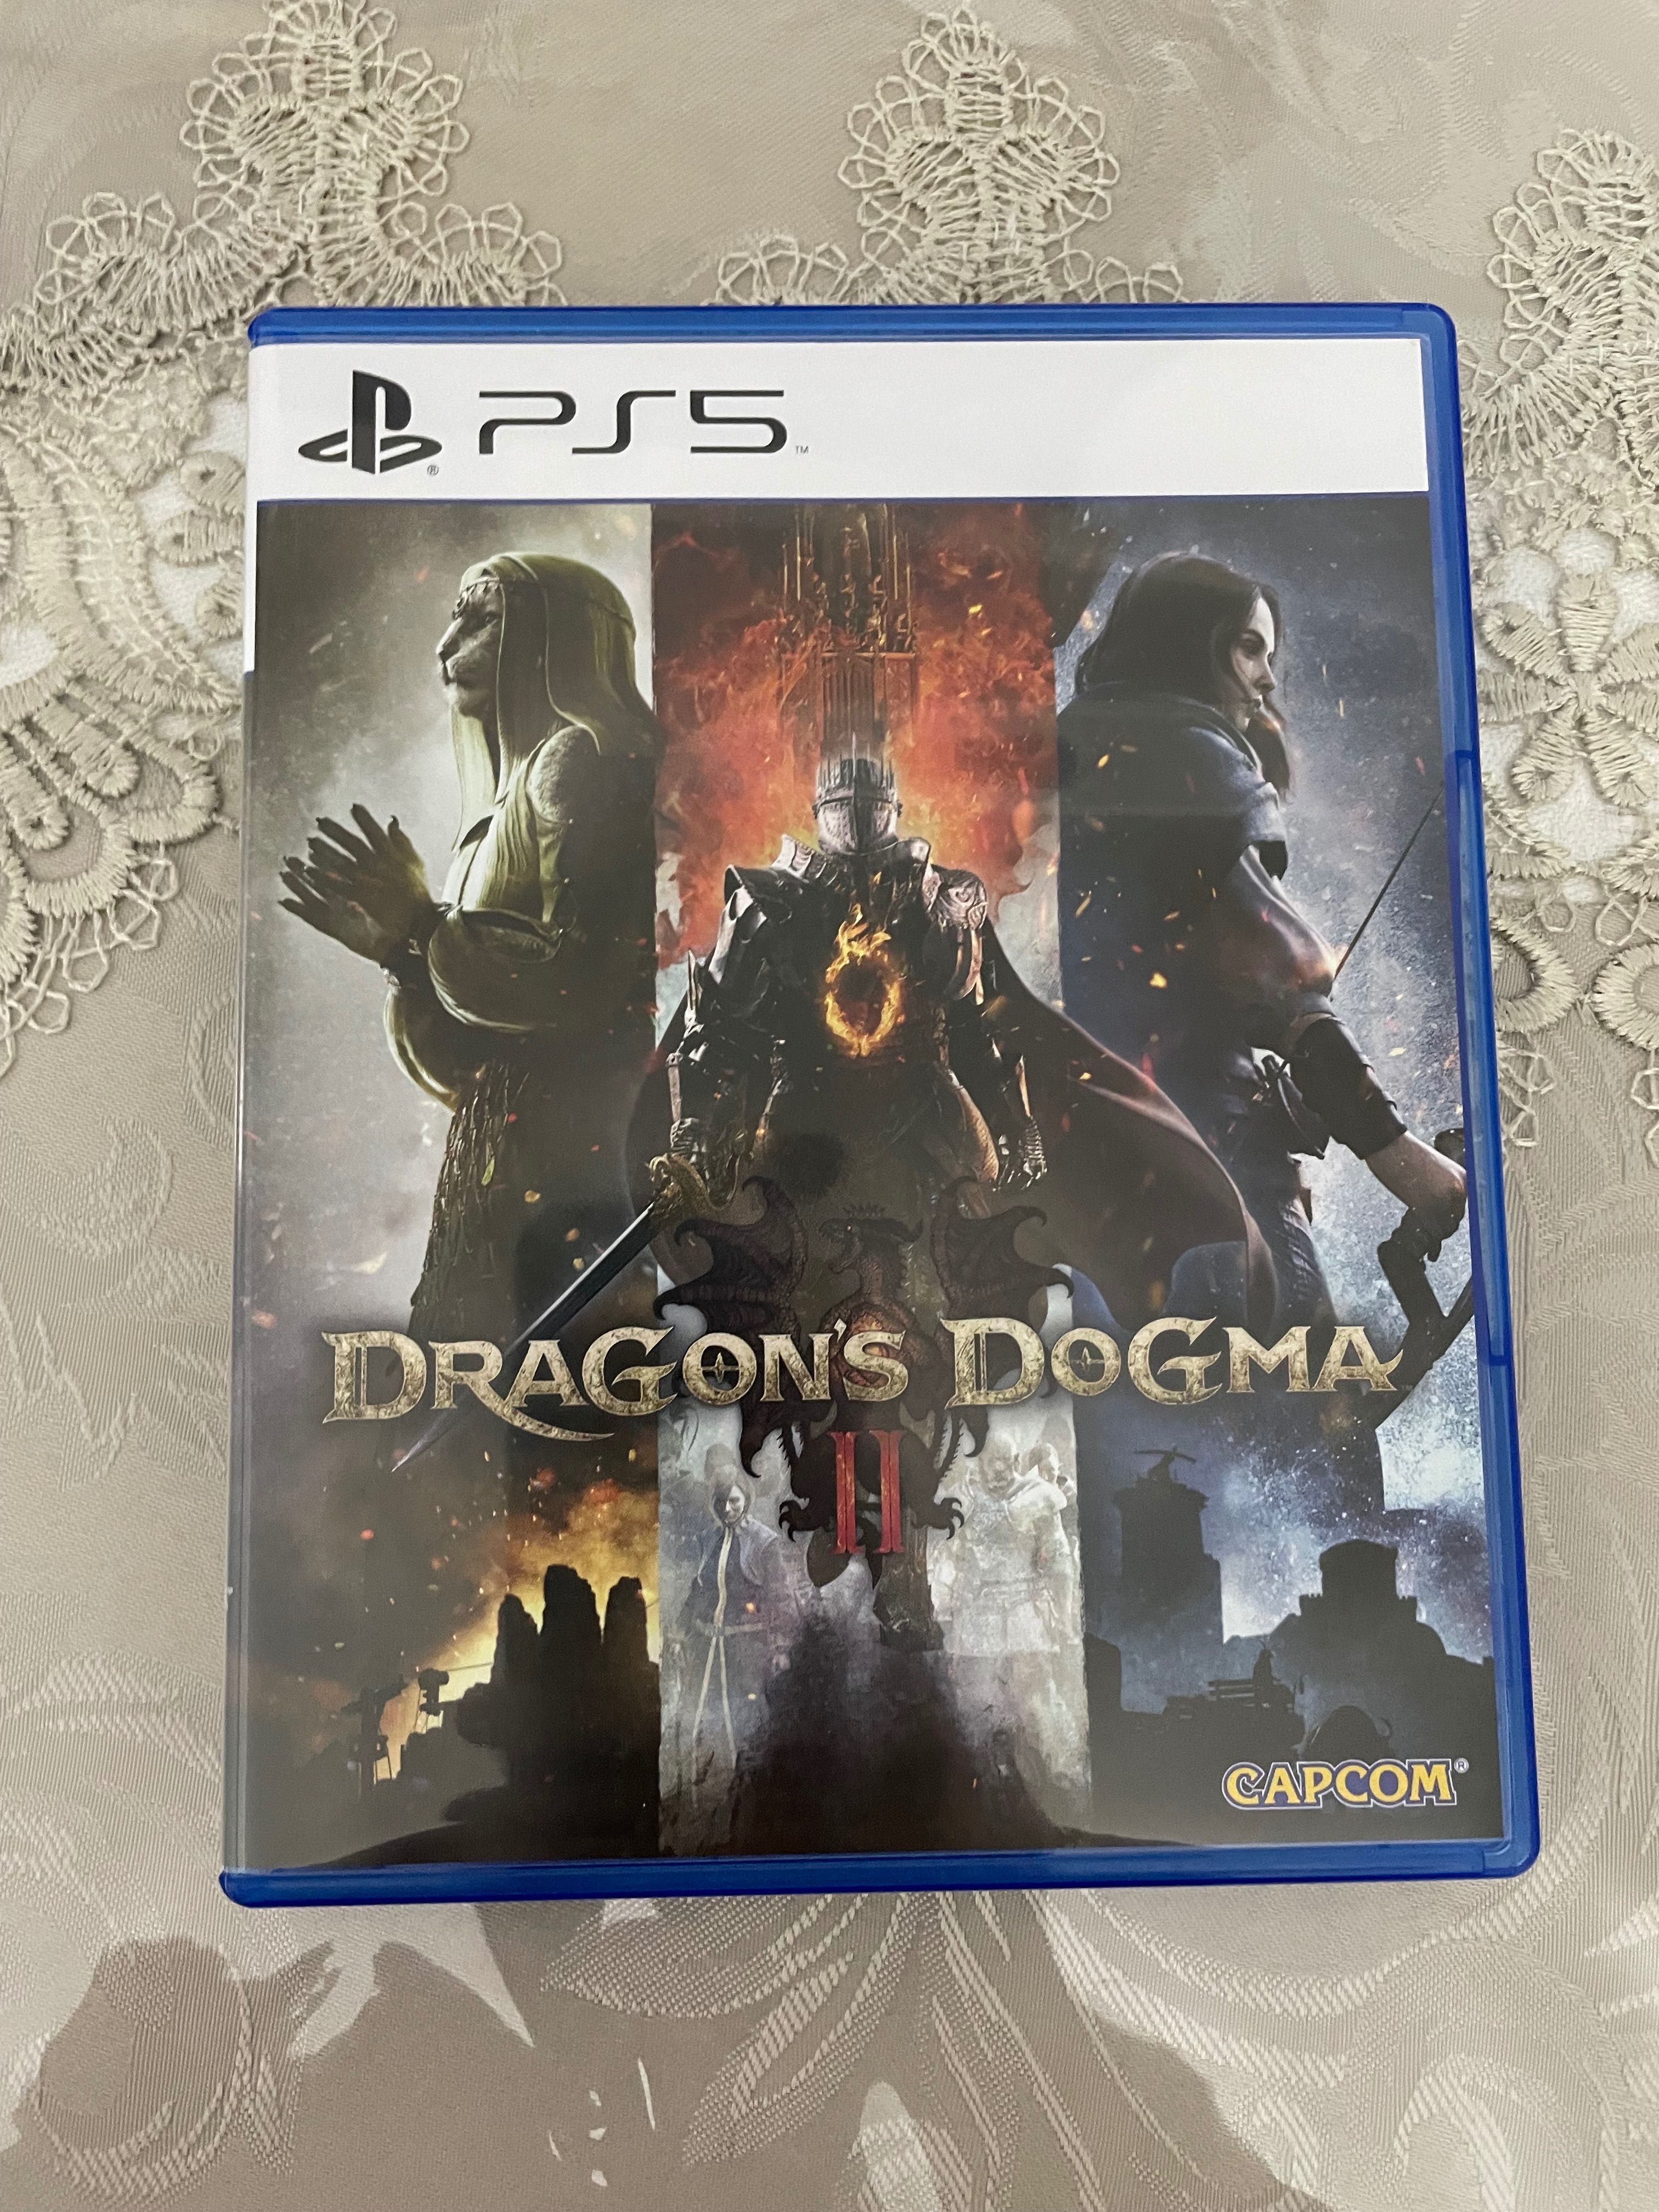 Dragon's Dogma II PS5